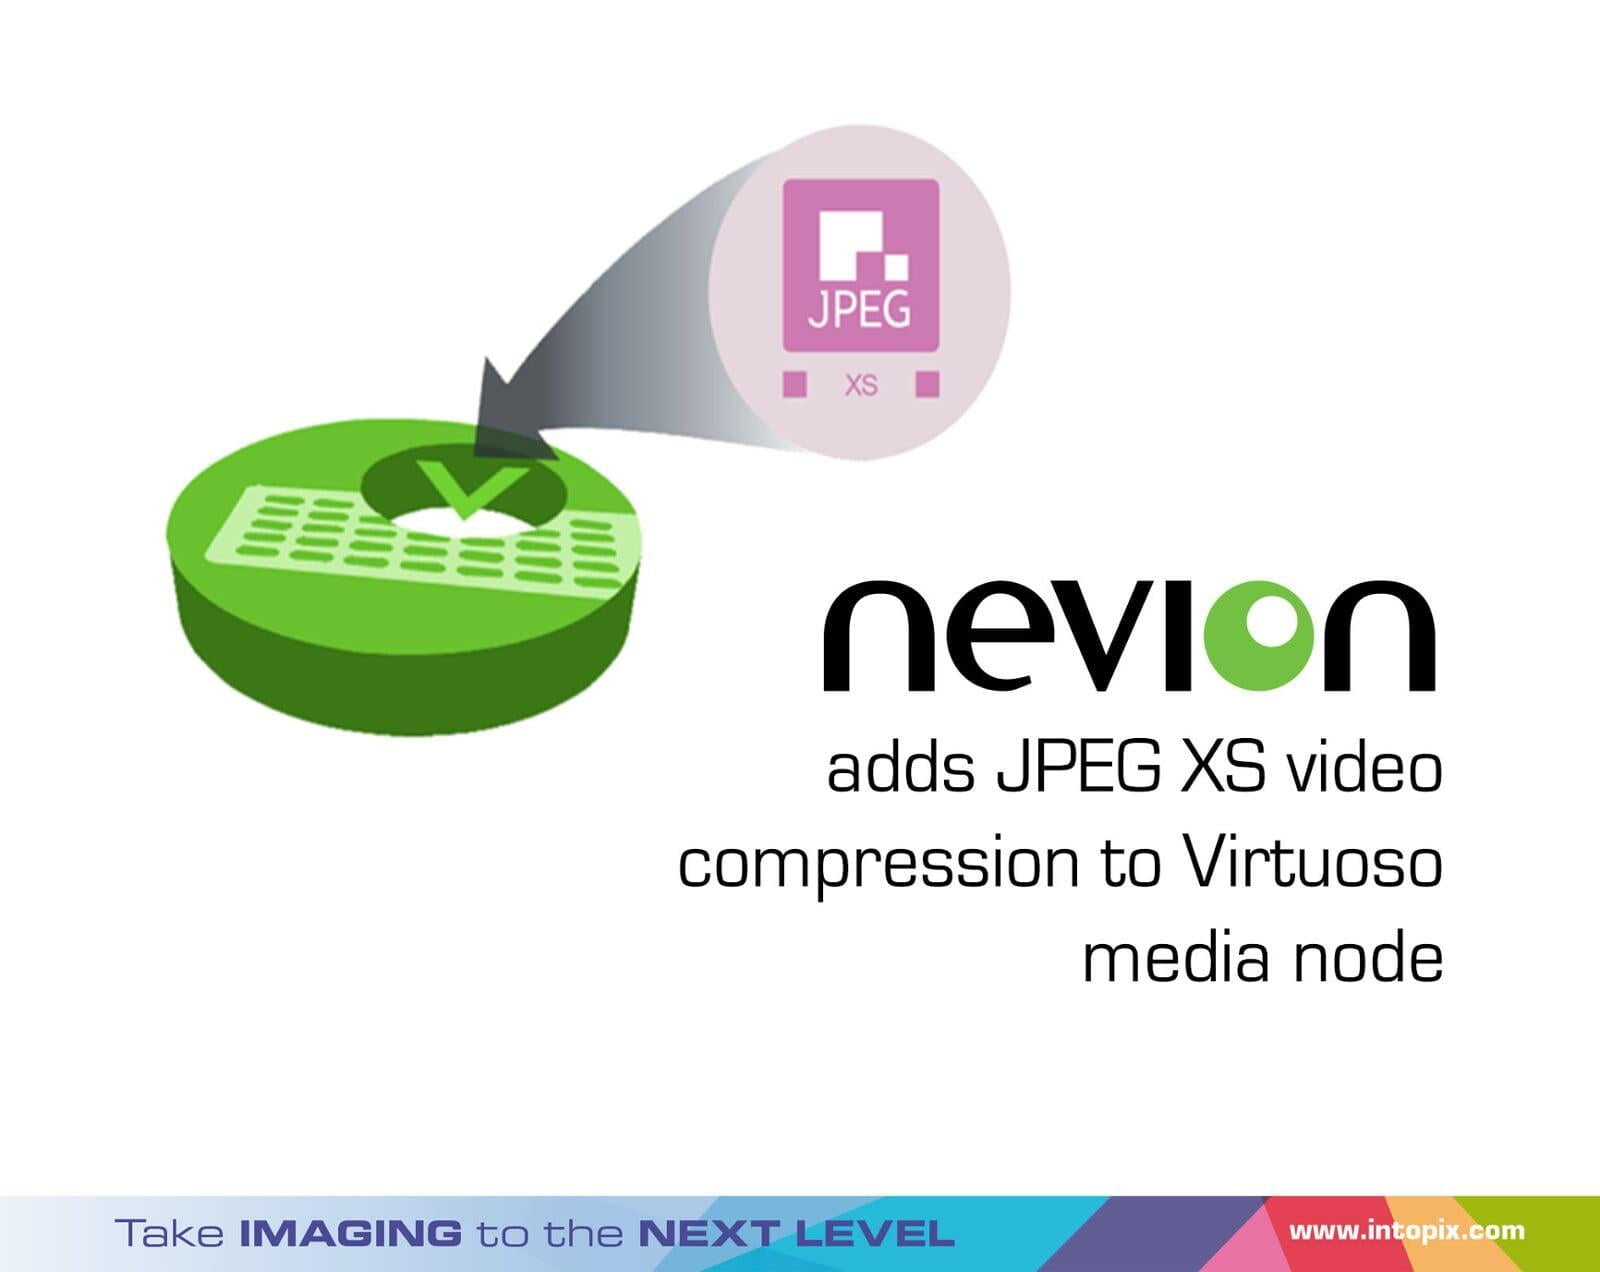 Nevion adds JPEG XS video compression to Virtuoso media node